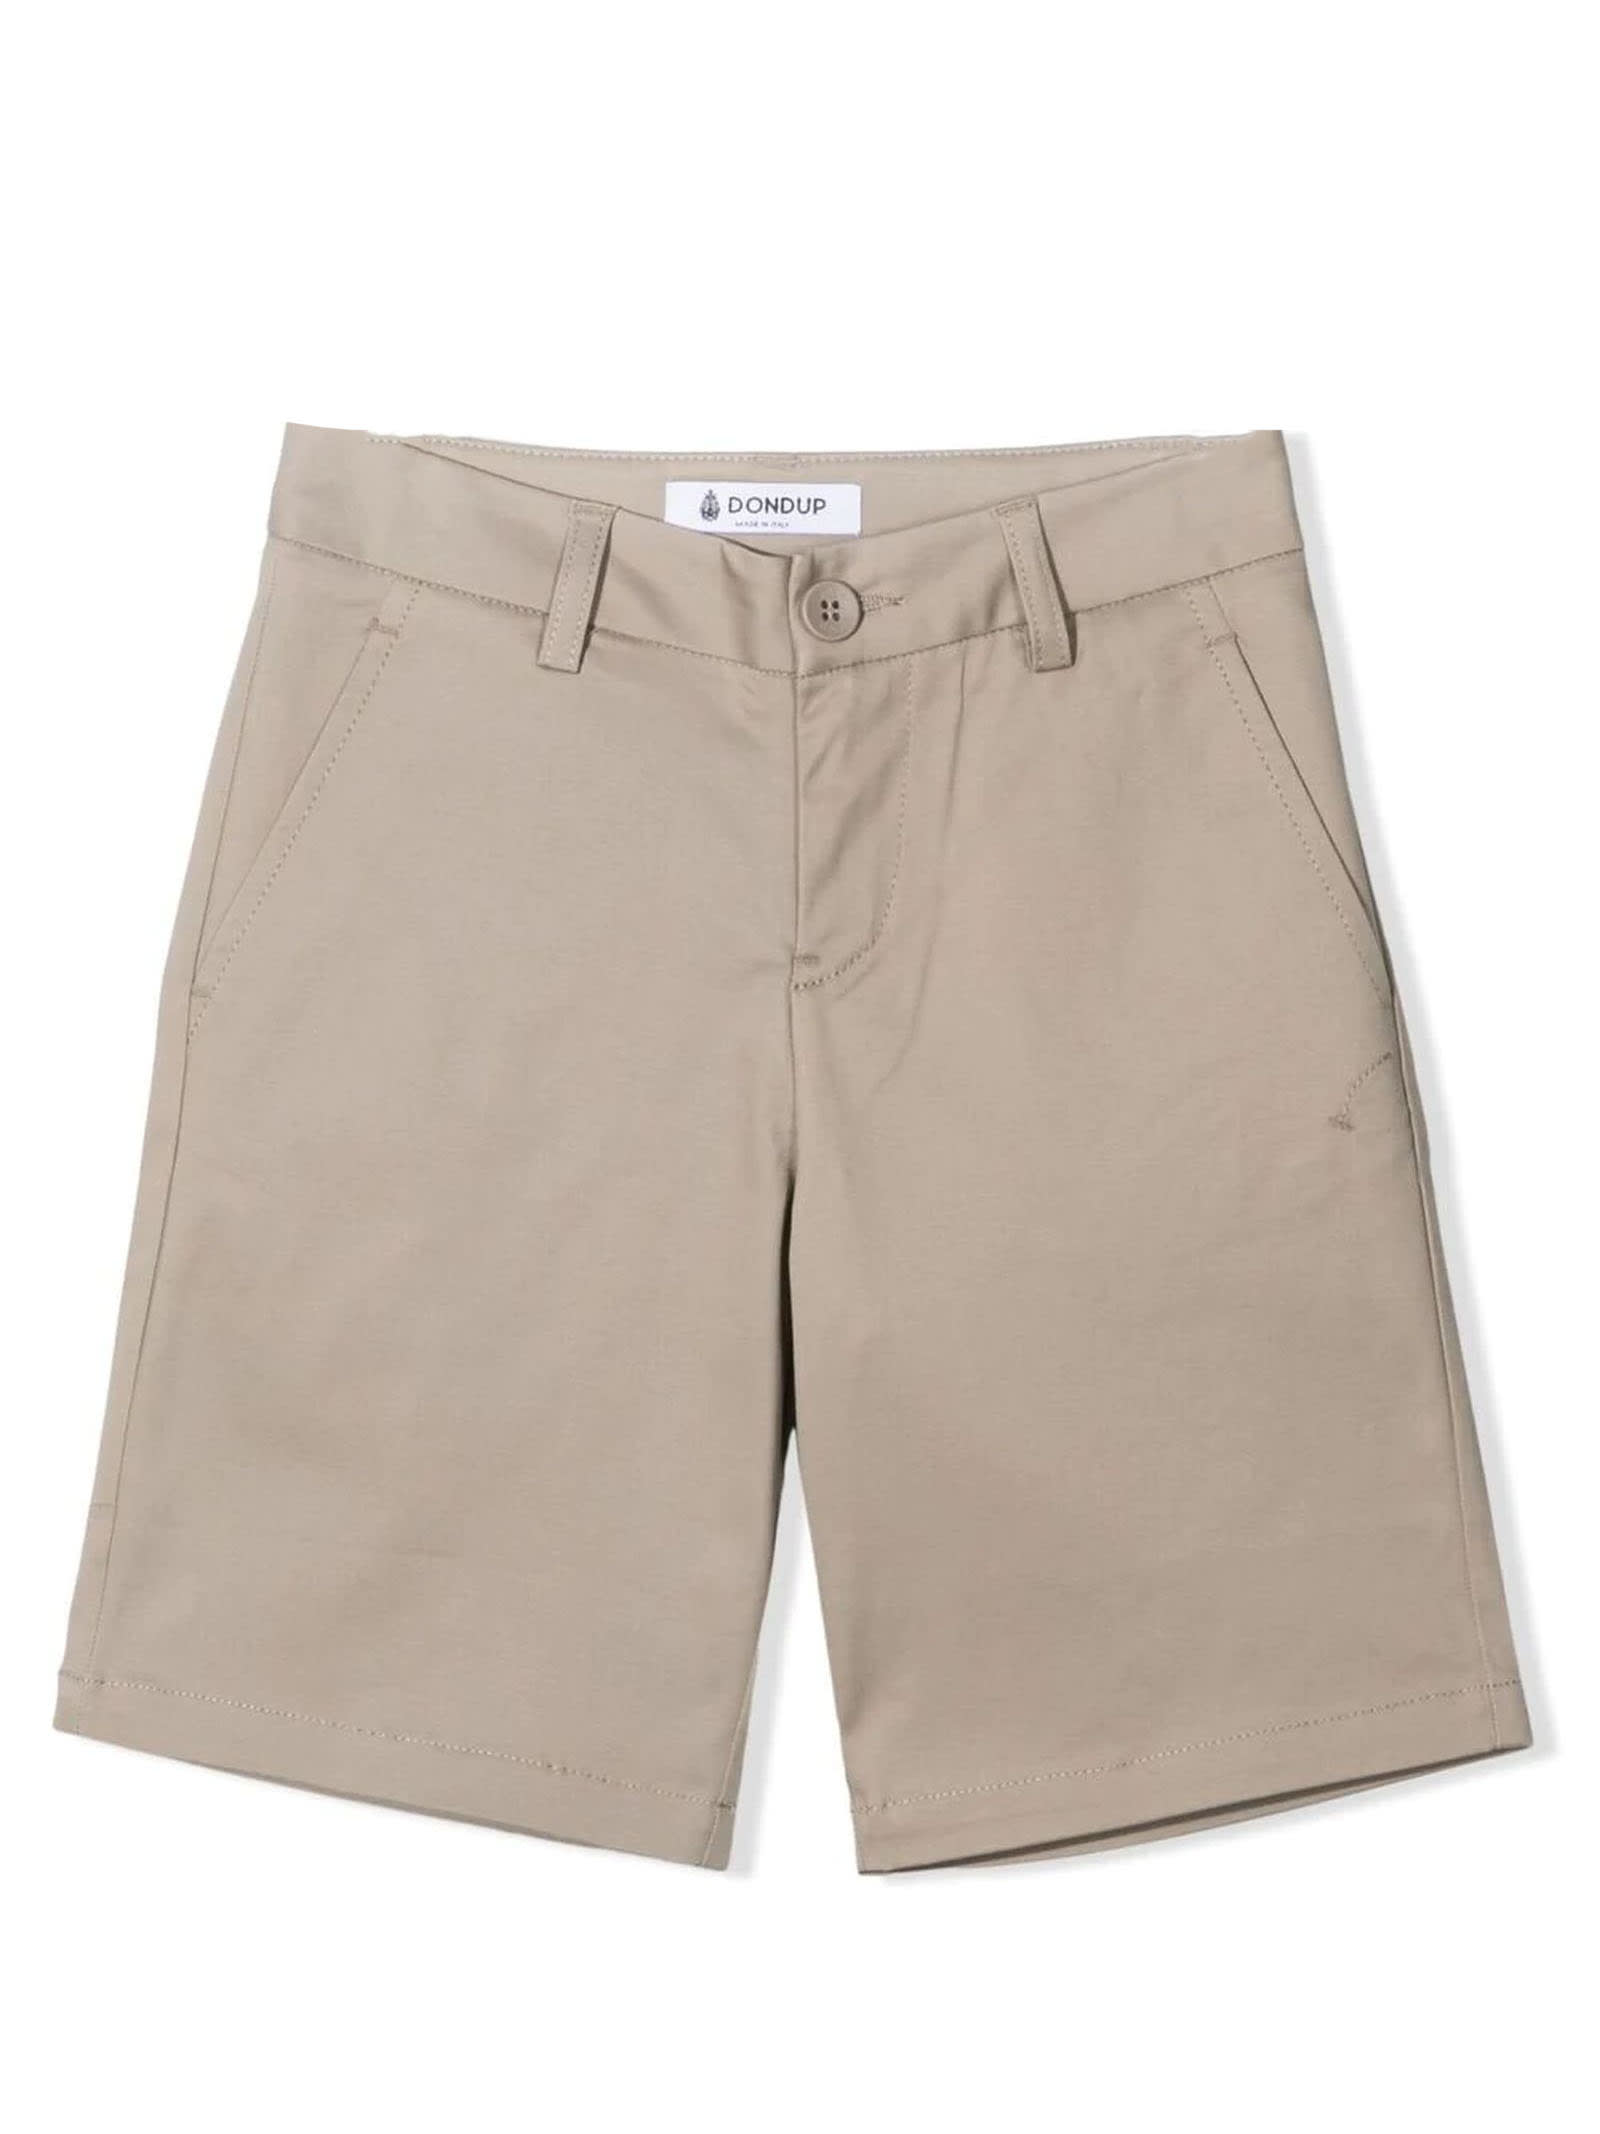 Dondup Beige Cotton Chino Shorts